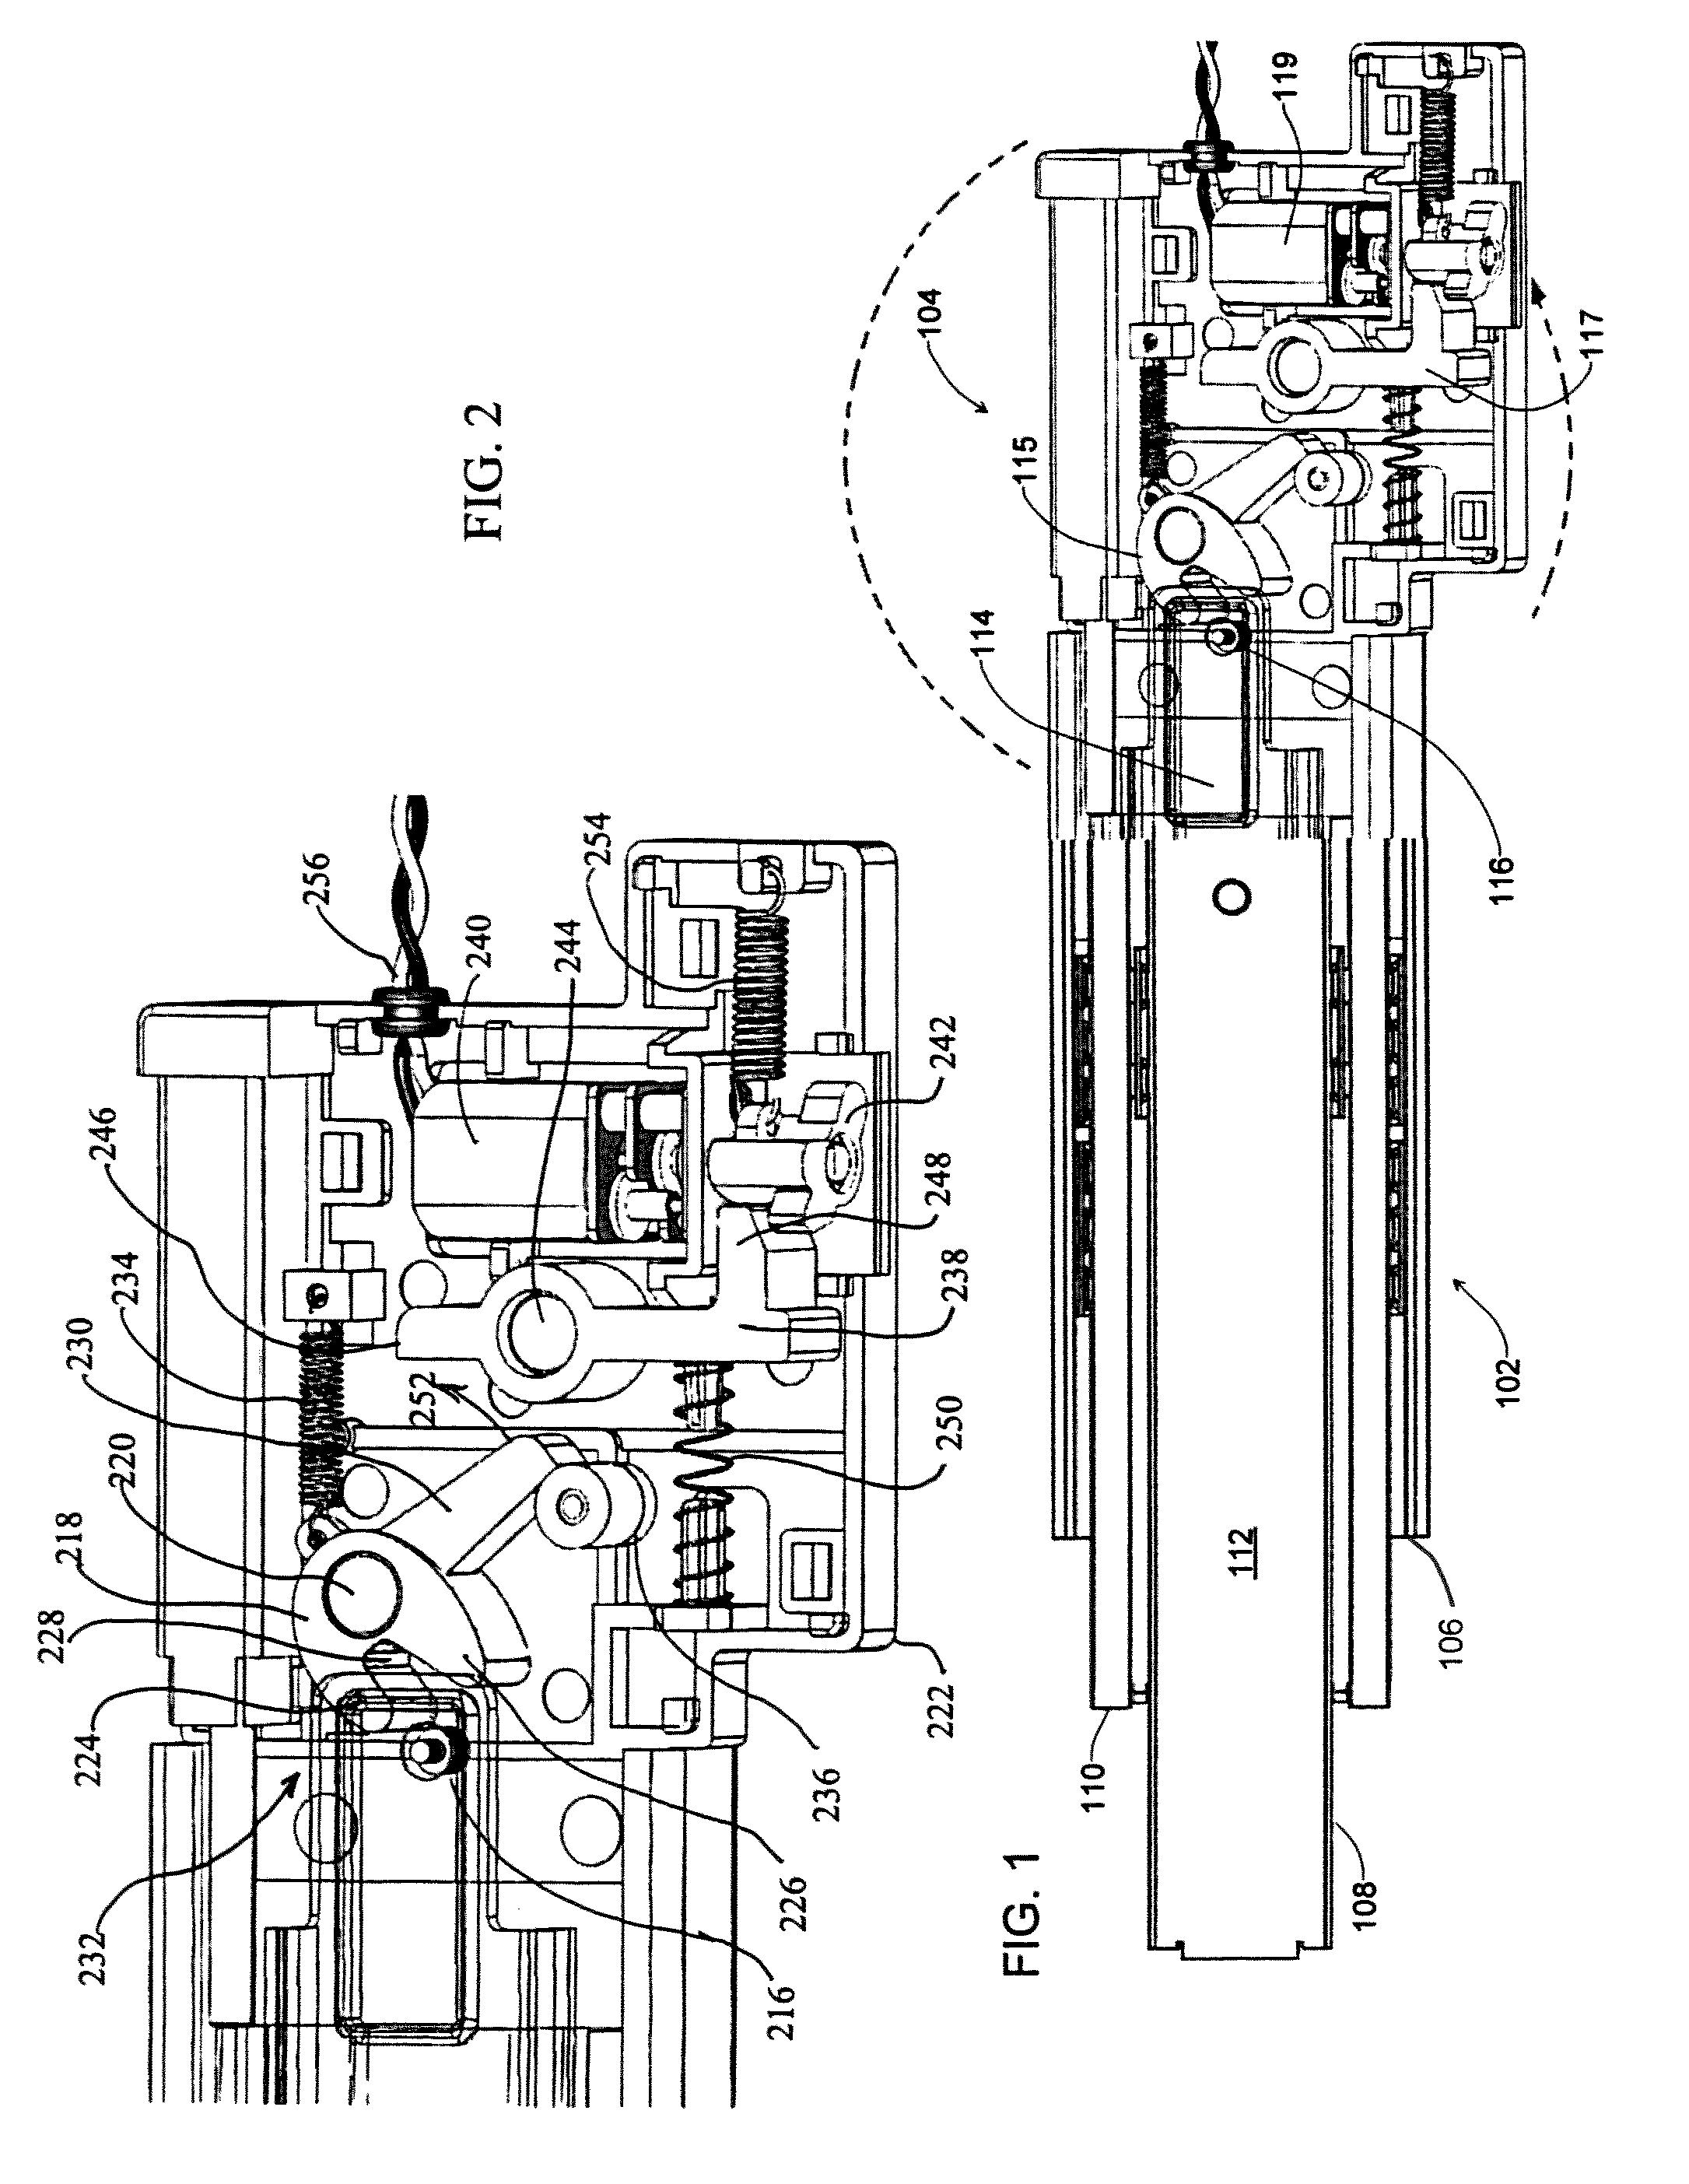 Drawer slide and locking mechanism